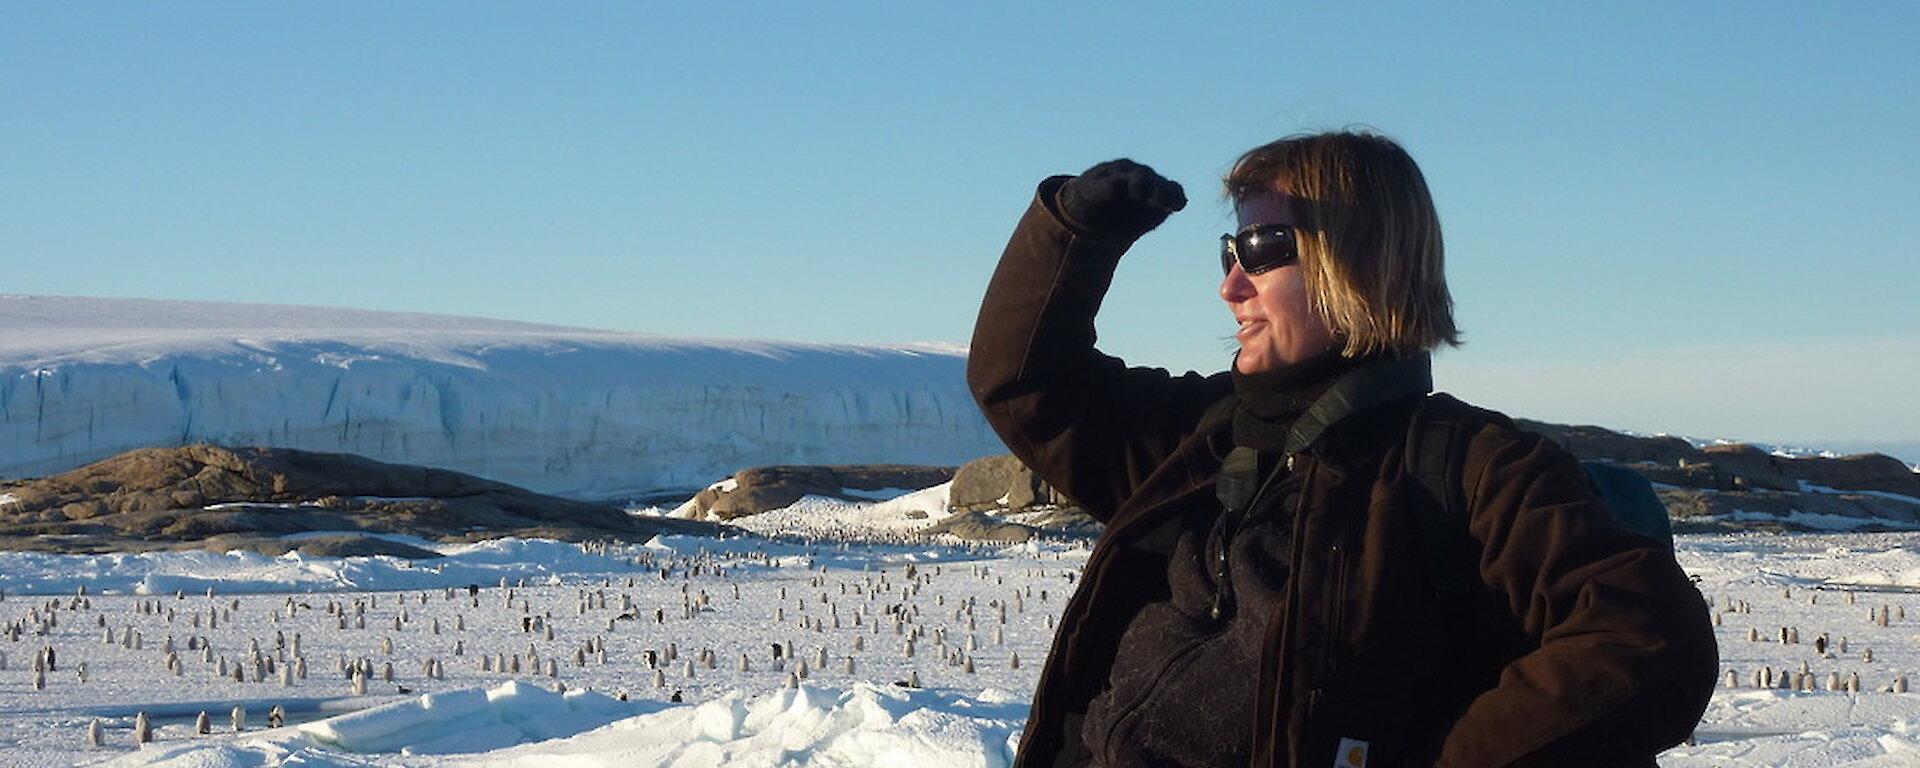 Penguin biologist, Dr Barbara Wienecke, near an Emperor penguin colony in Antarctica